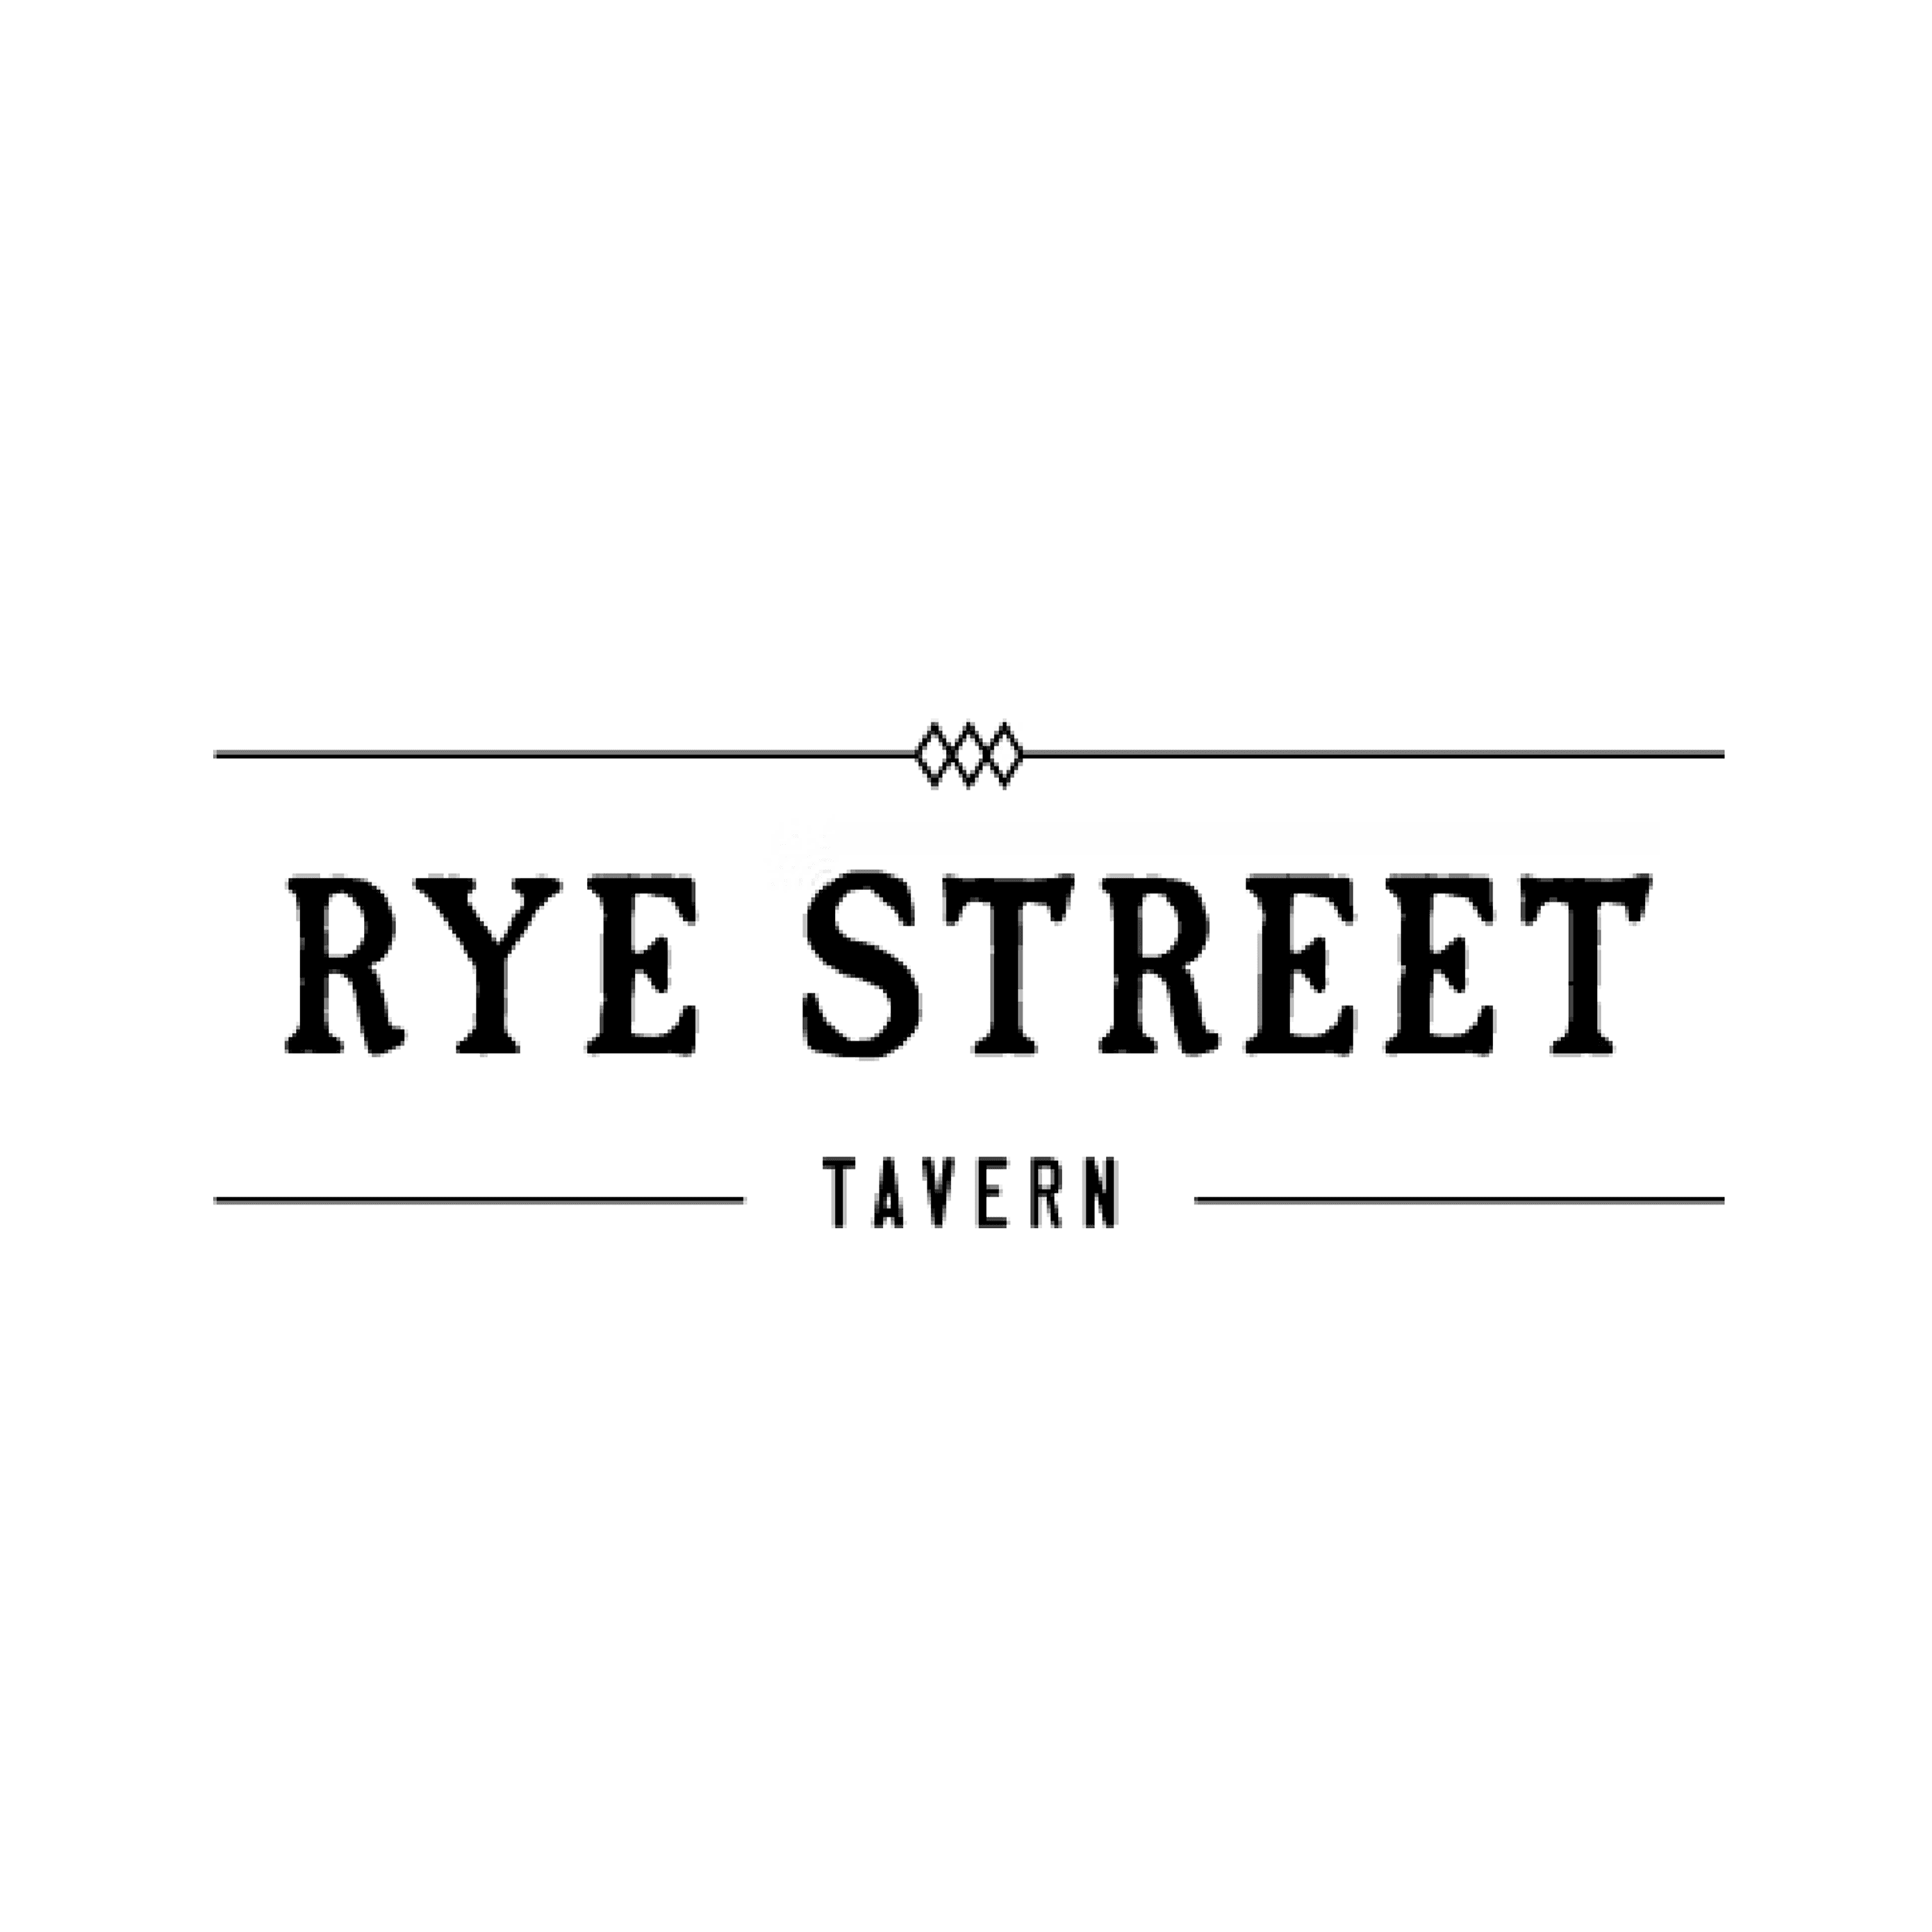 RYE STREET TAVERN